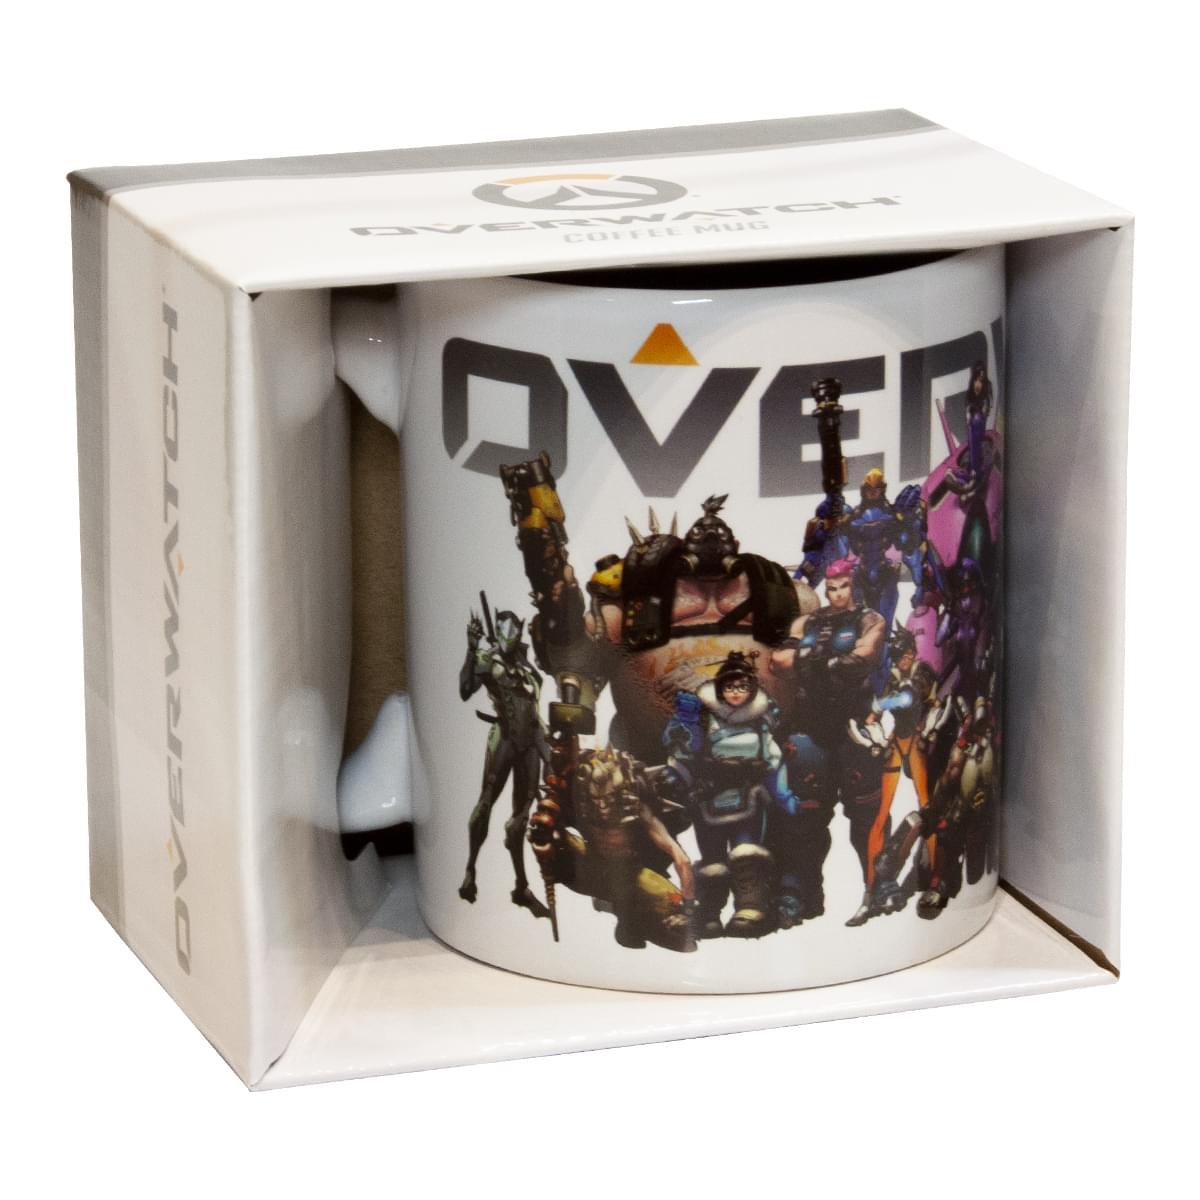 Overwatch Mug | Overwatch Characters and Logo Mug | Collector’s Edition